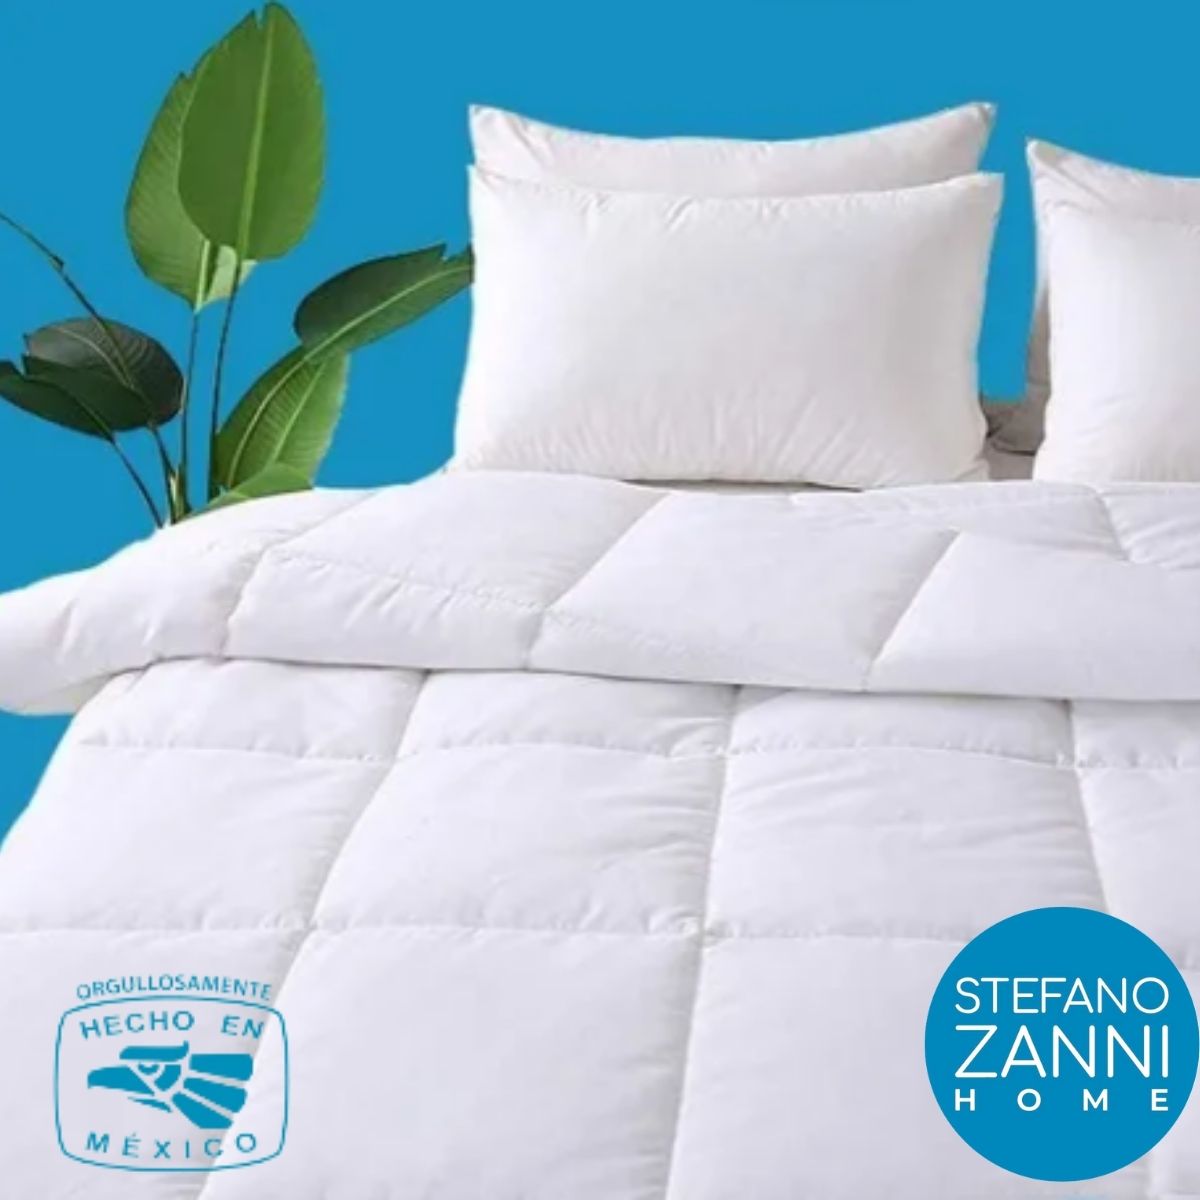 70 x 140 cm Playshoes 770321-1 Oeko-Tex Standard 100 para cama infantil color blanco Colchón Jersey impermeable y transpirable 